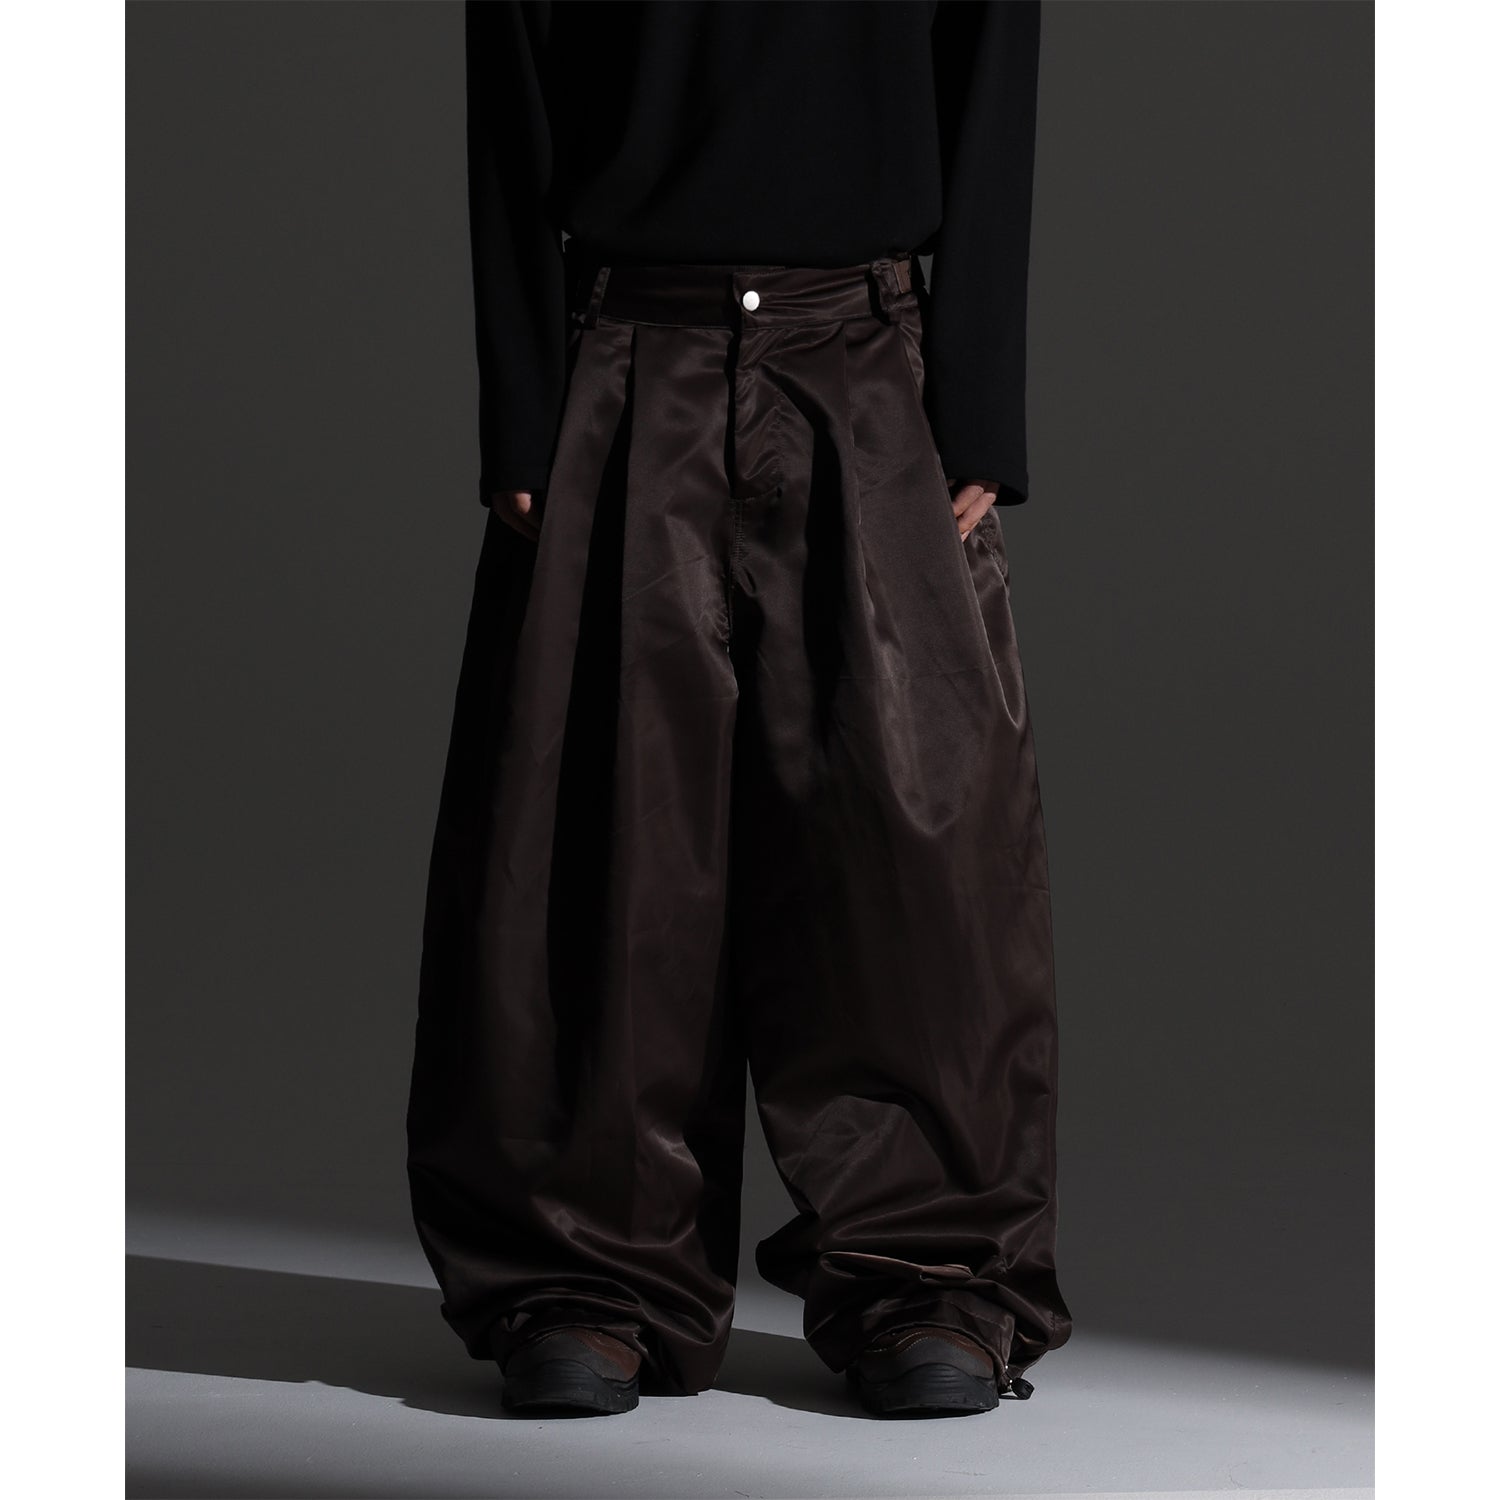 DP-078 (satin nylon wide pants brown )